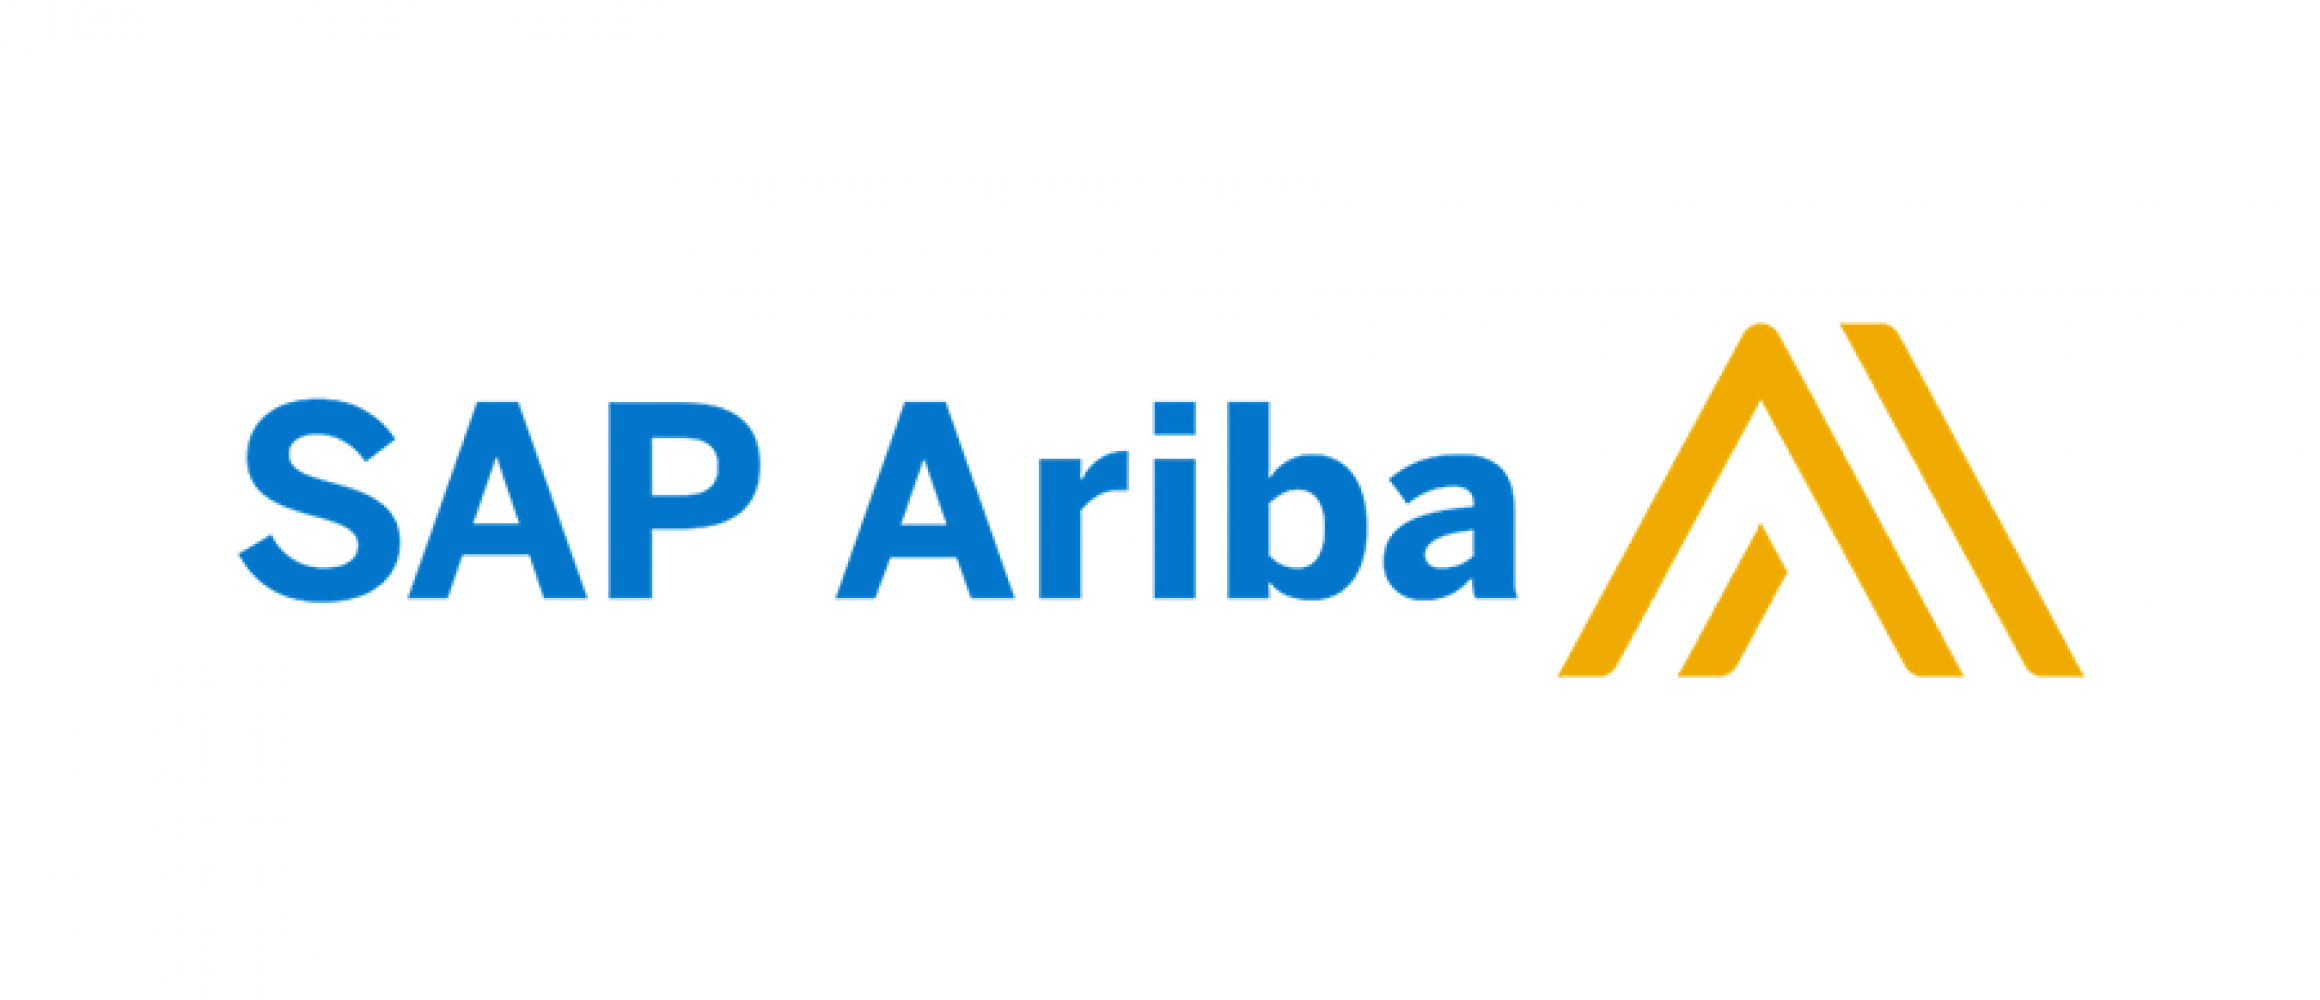 sap business network ariba